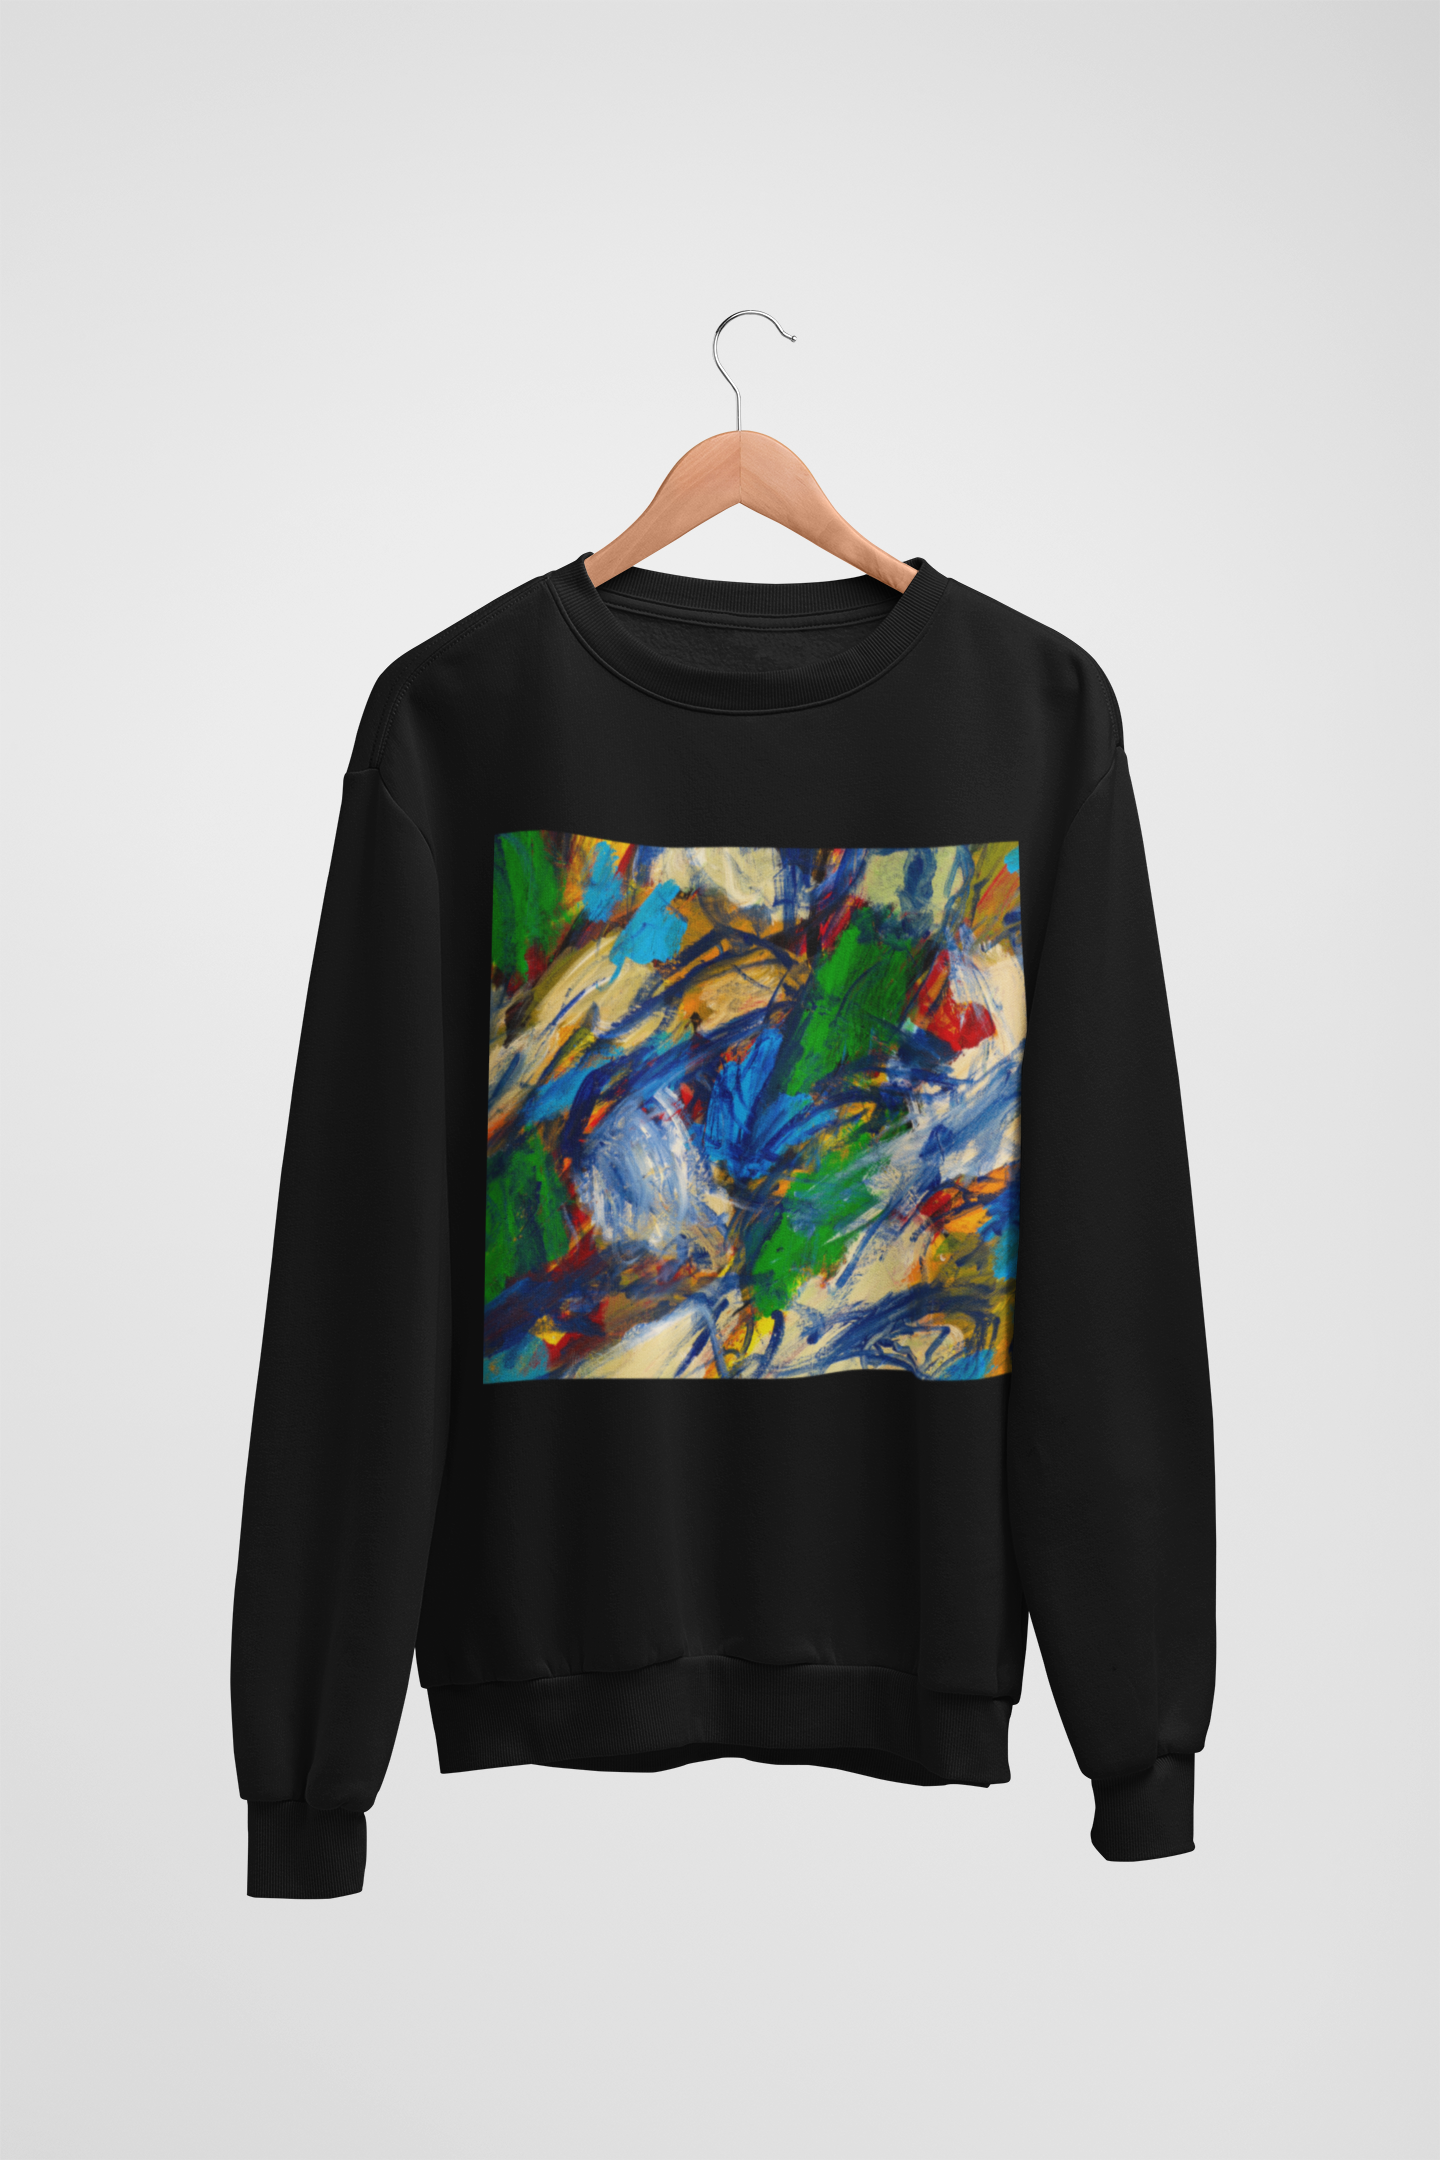 Abstract Art Black Sweatshirt For Women